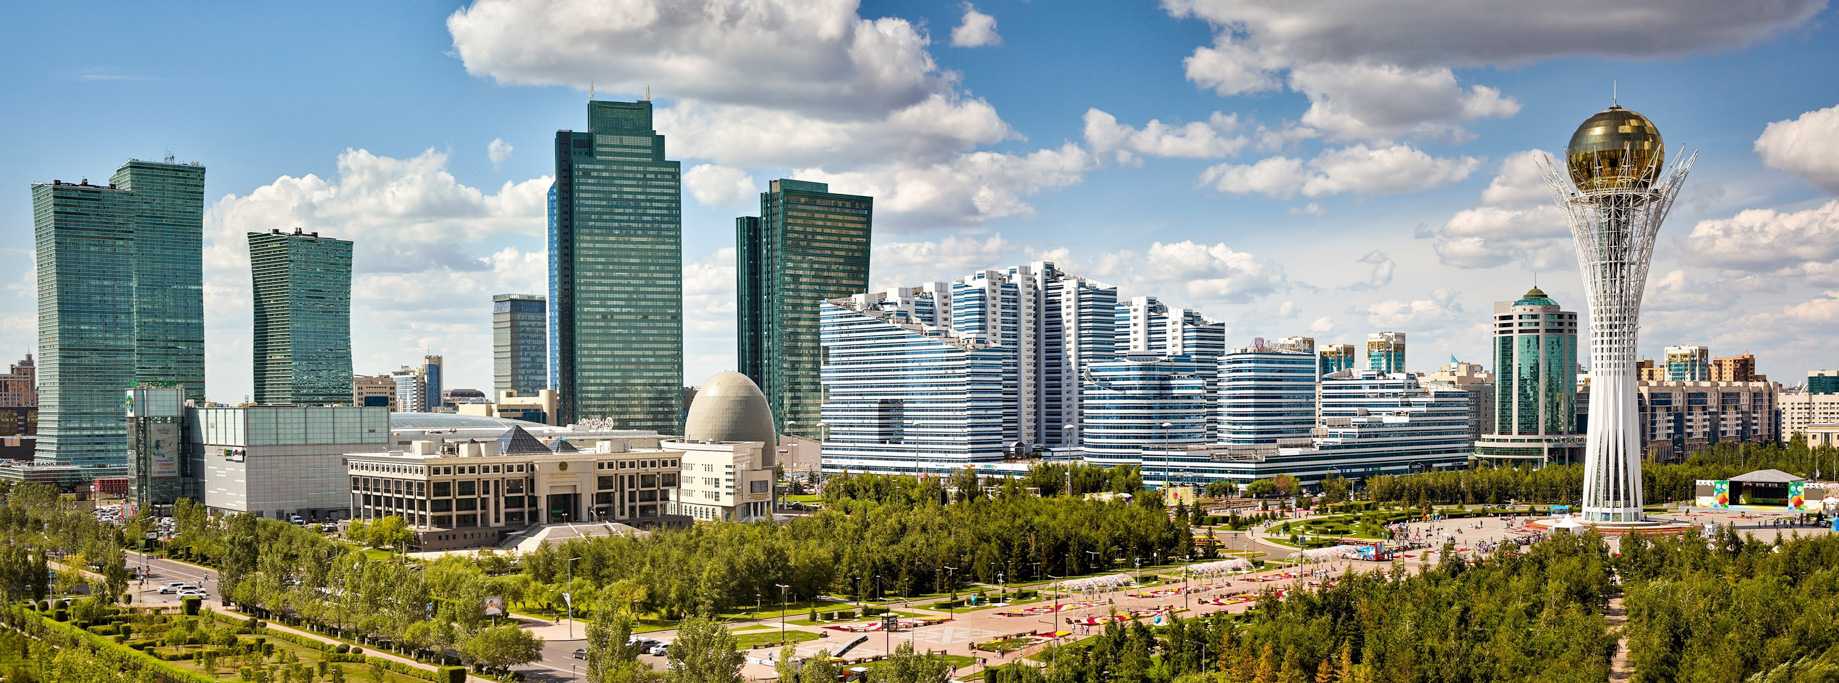 The Ritz-Carlton, Astana Hotel – Nur-Sultan, Kazakhstan – Astana City Skyline